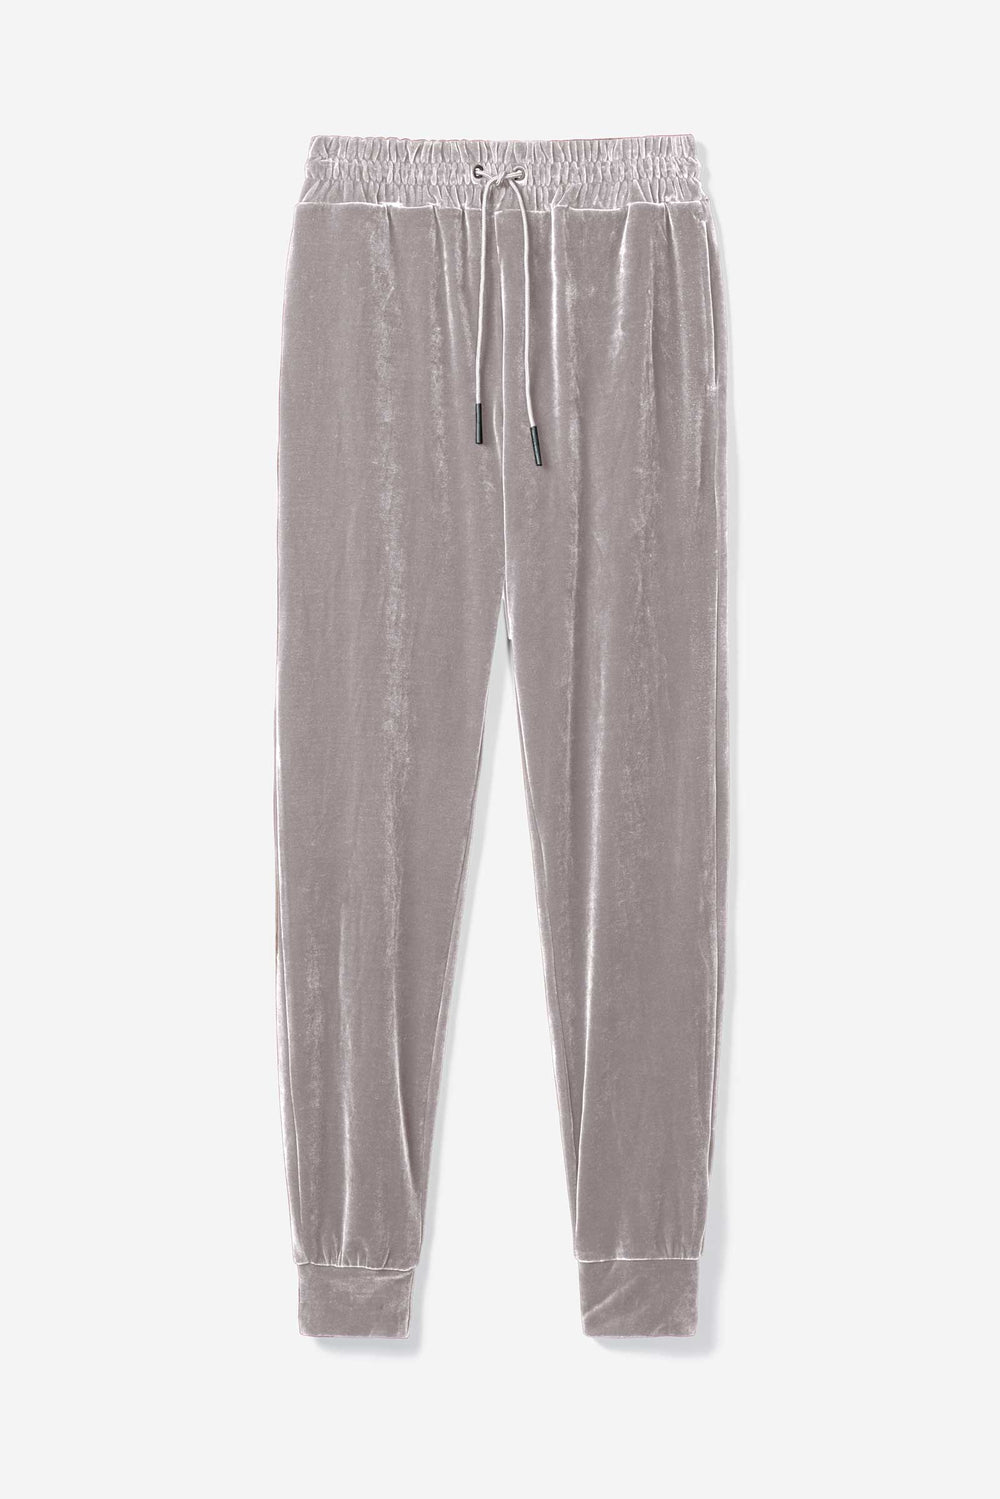 Grey LADIES GYM PANTS BREZEL-LG-BLK, Casual Wear, Slim Fit at Rs 195/piece  in New Delhi